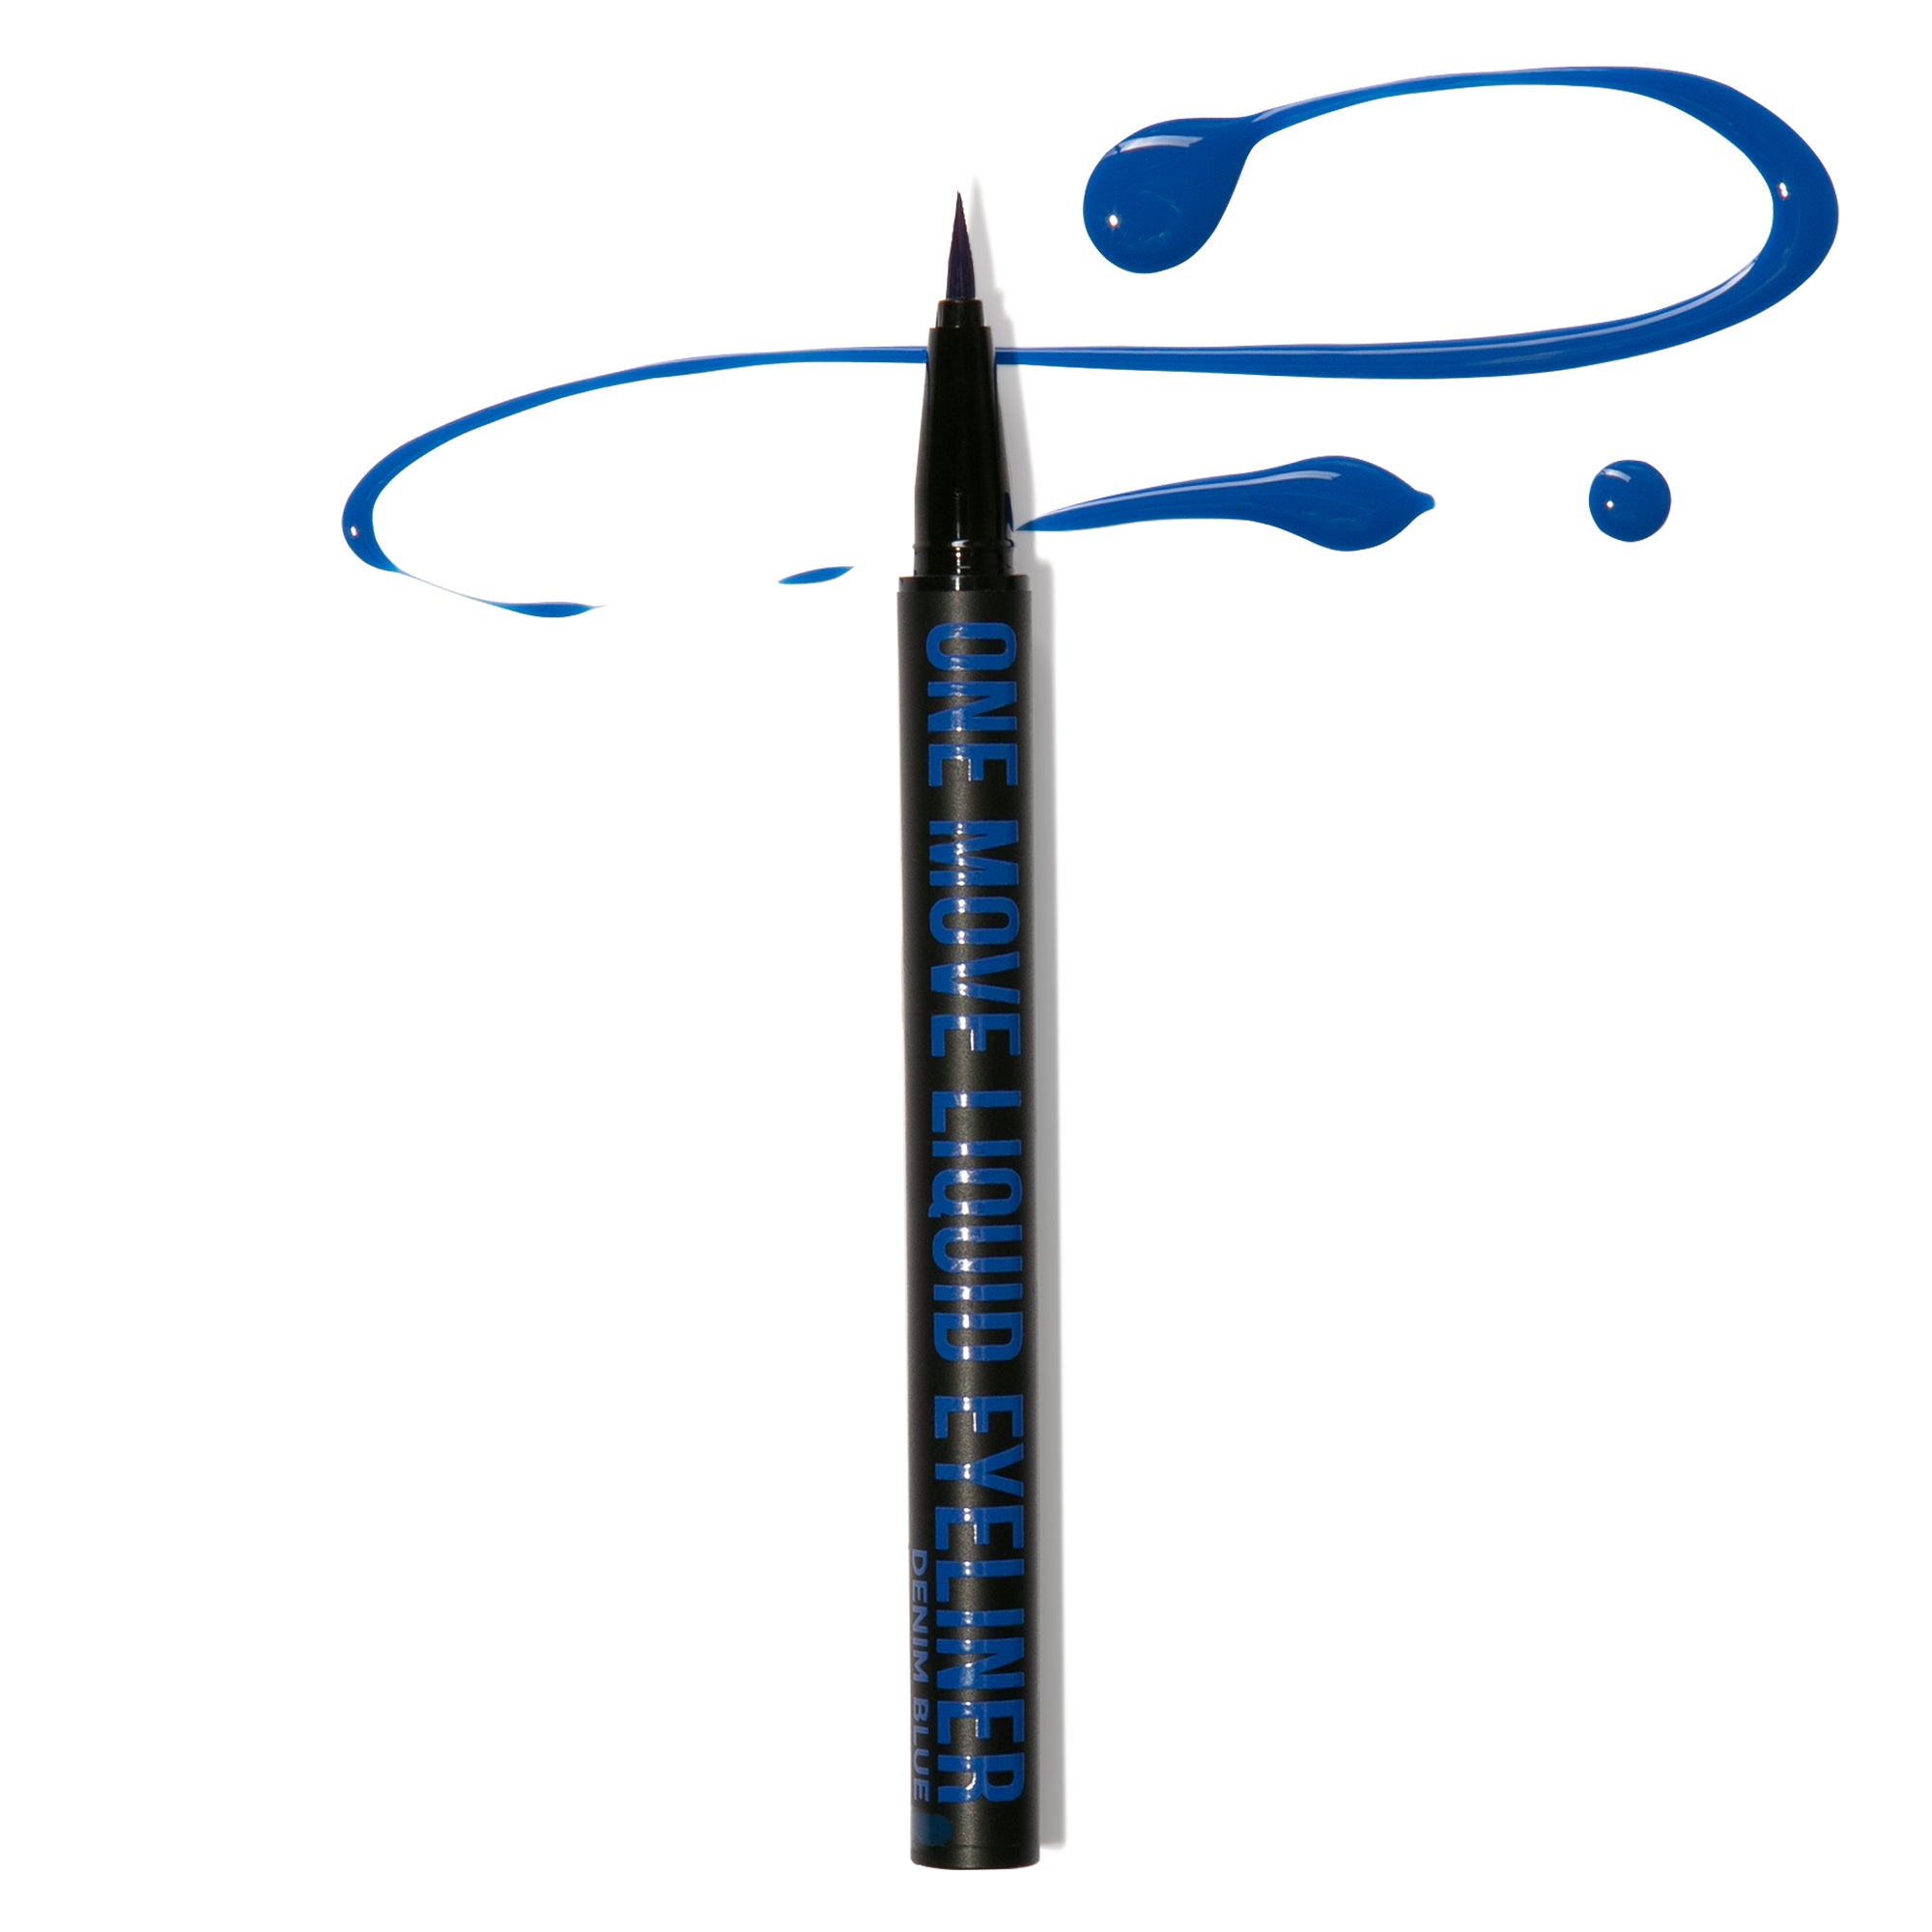 One Move Liquid Eyeliner - 03 denim blue - Inglot Cosmetics